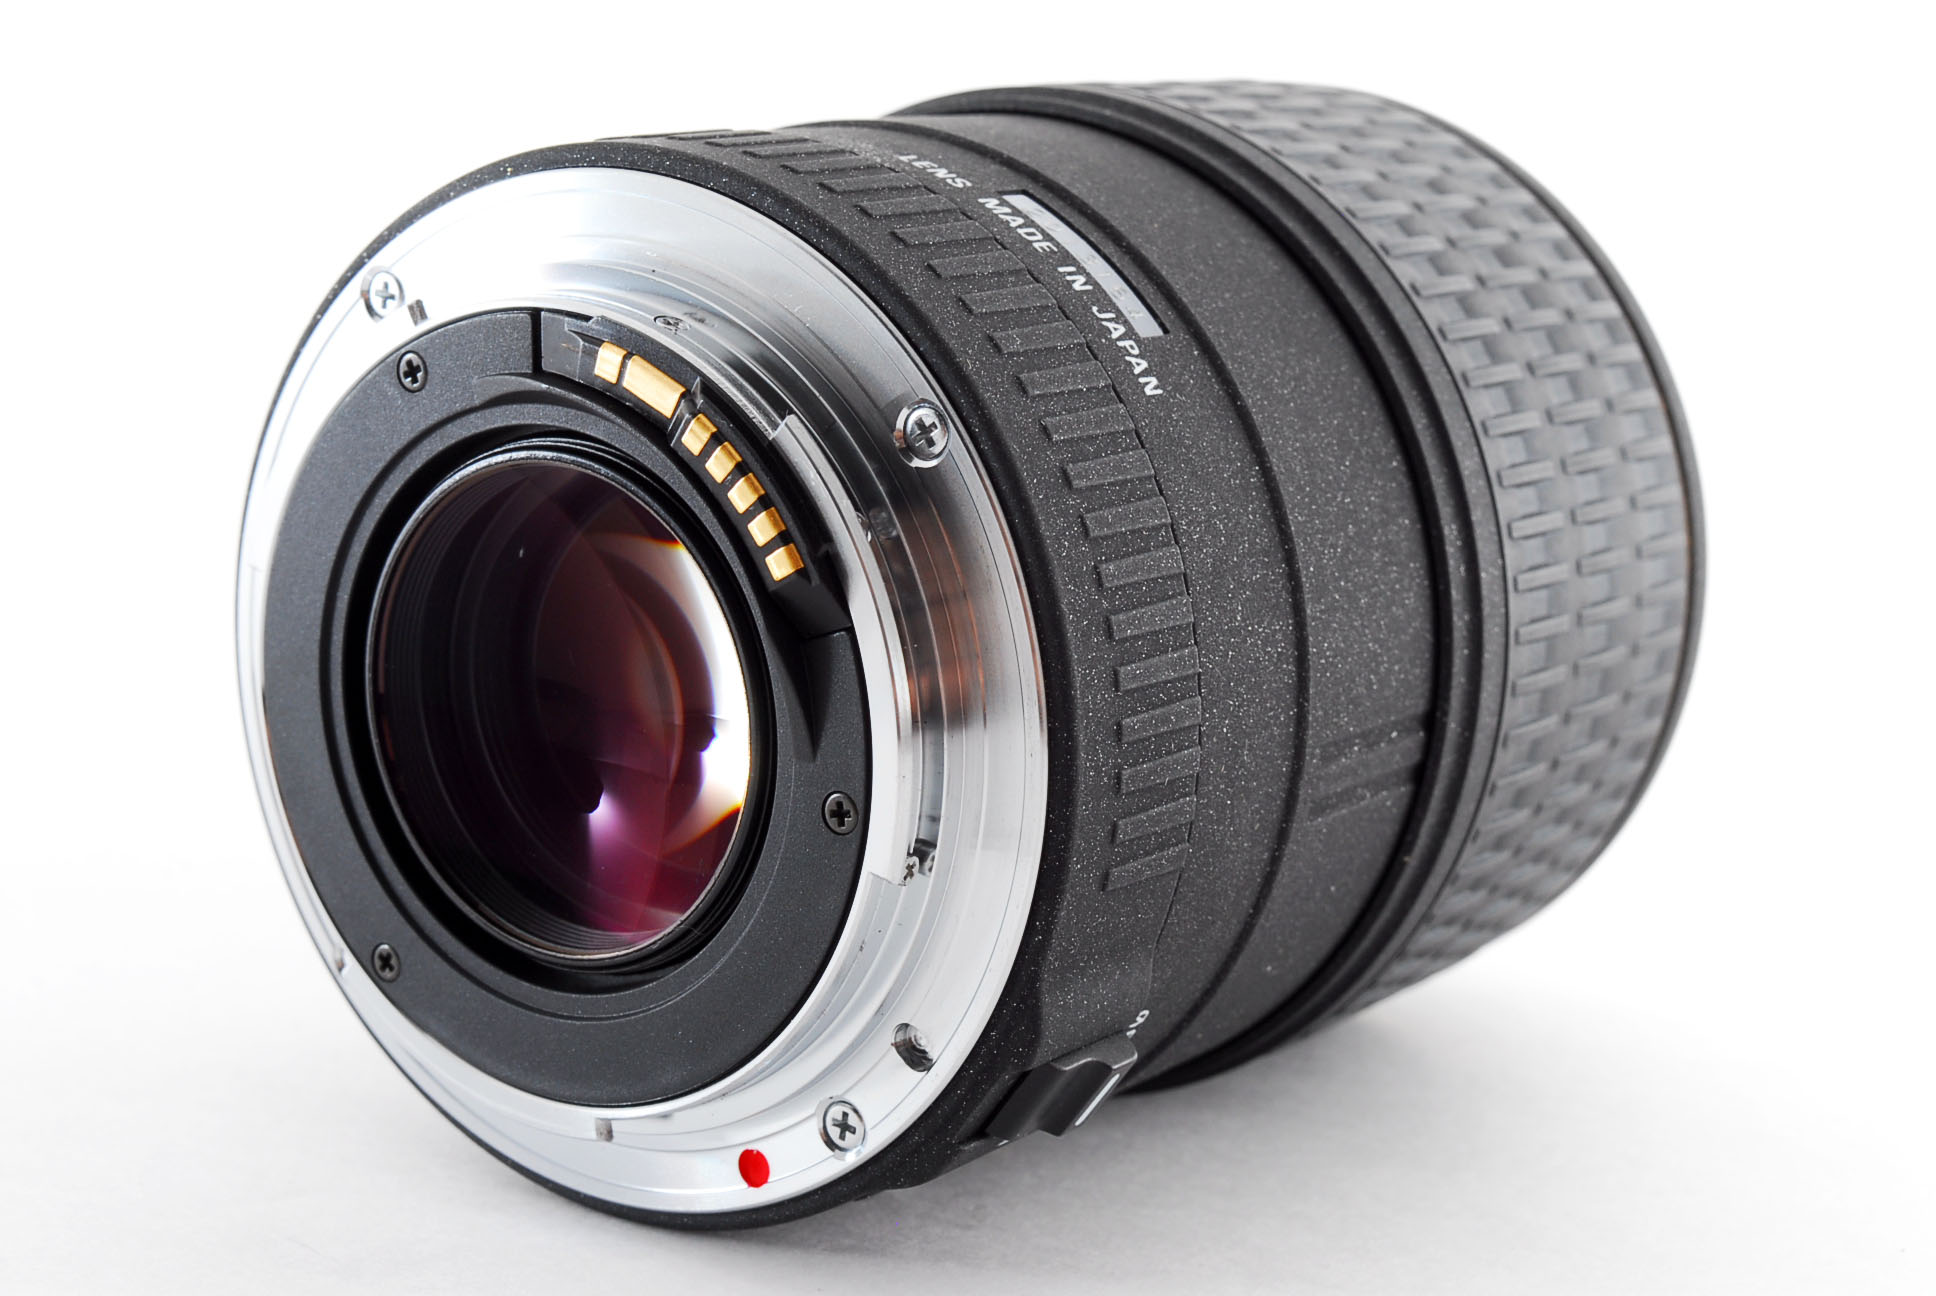 Nikon F5 Body MF-28 Data back 35mm Film Camera SLR from Japan 2499 | eBay